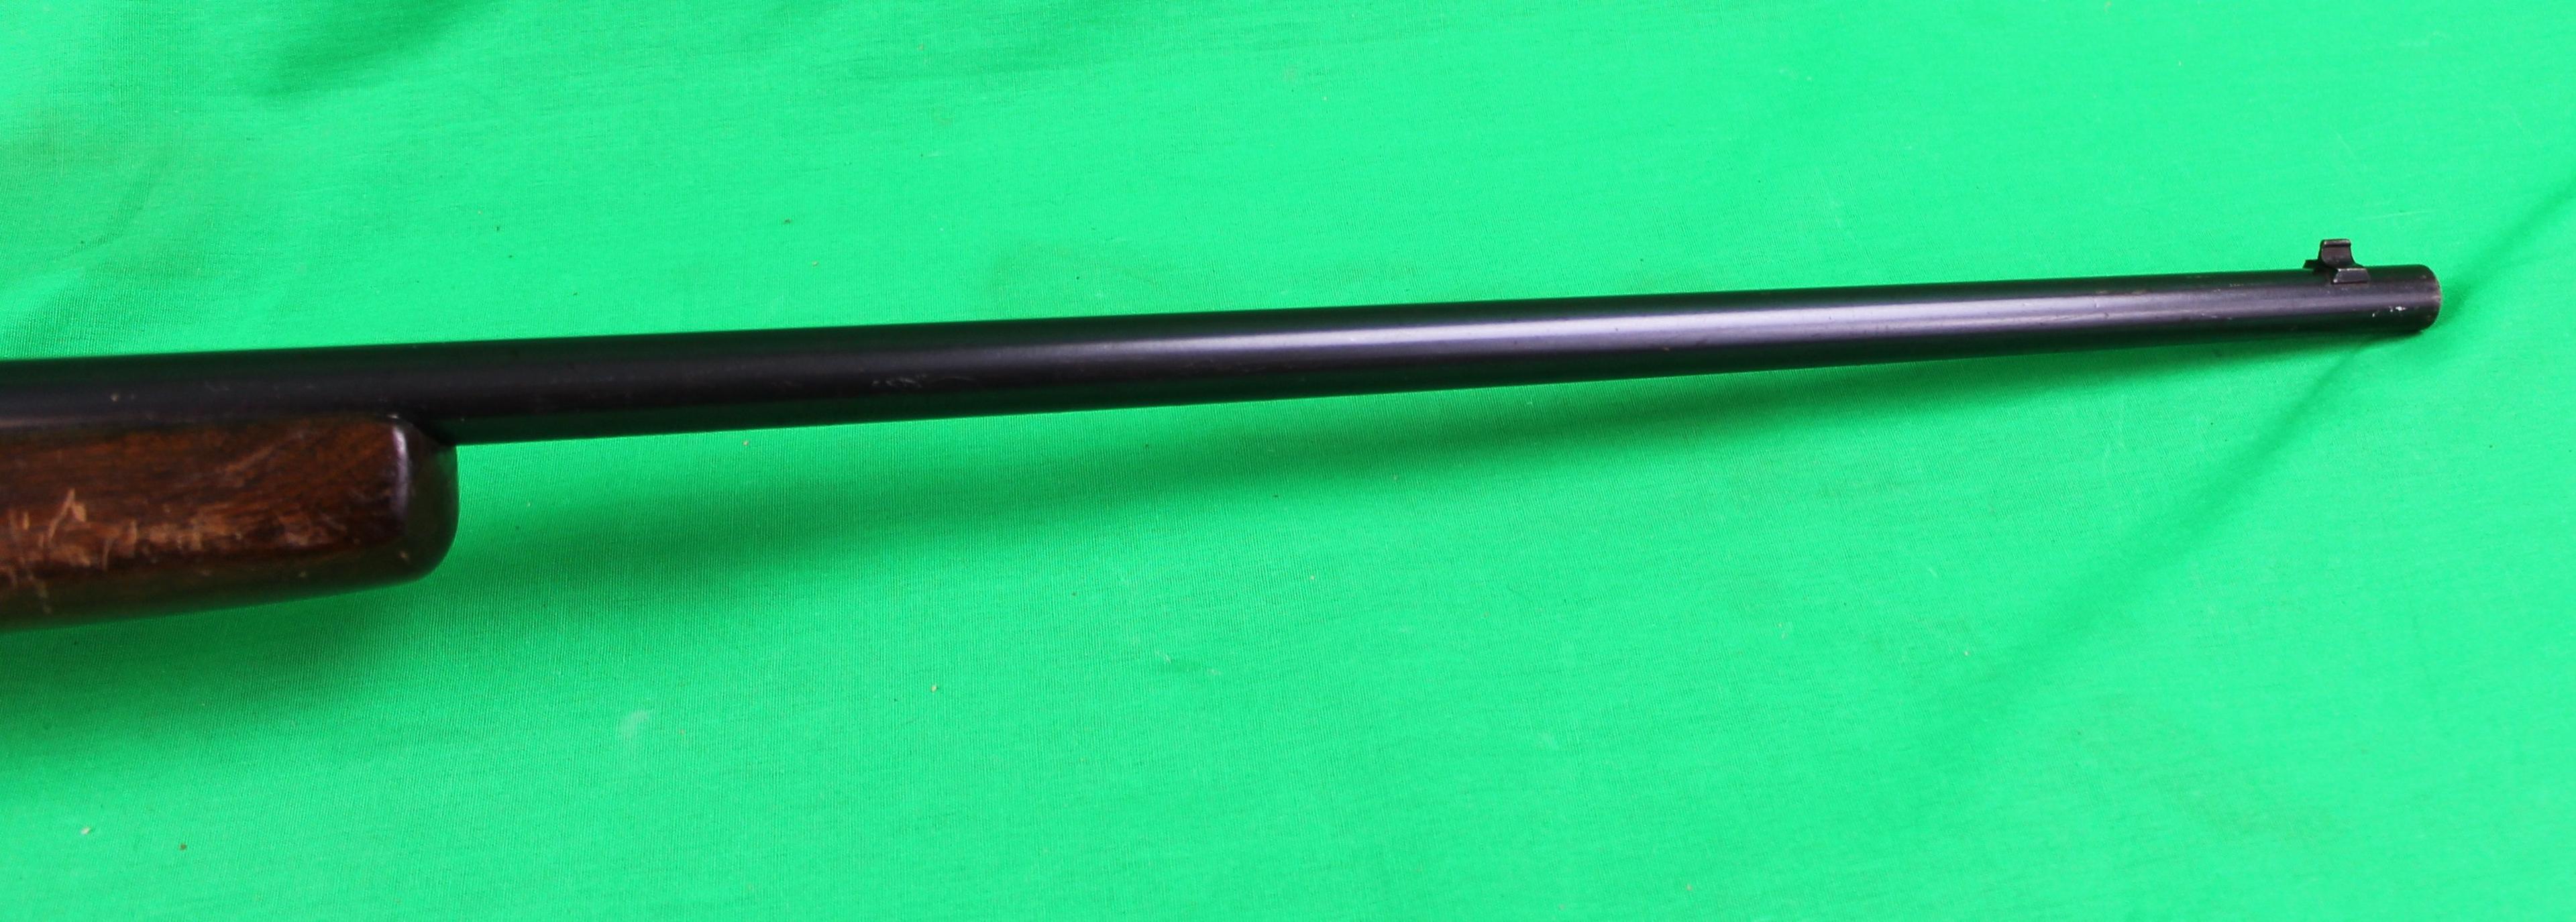 Winchester 74 22 Short